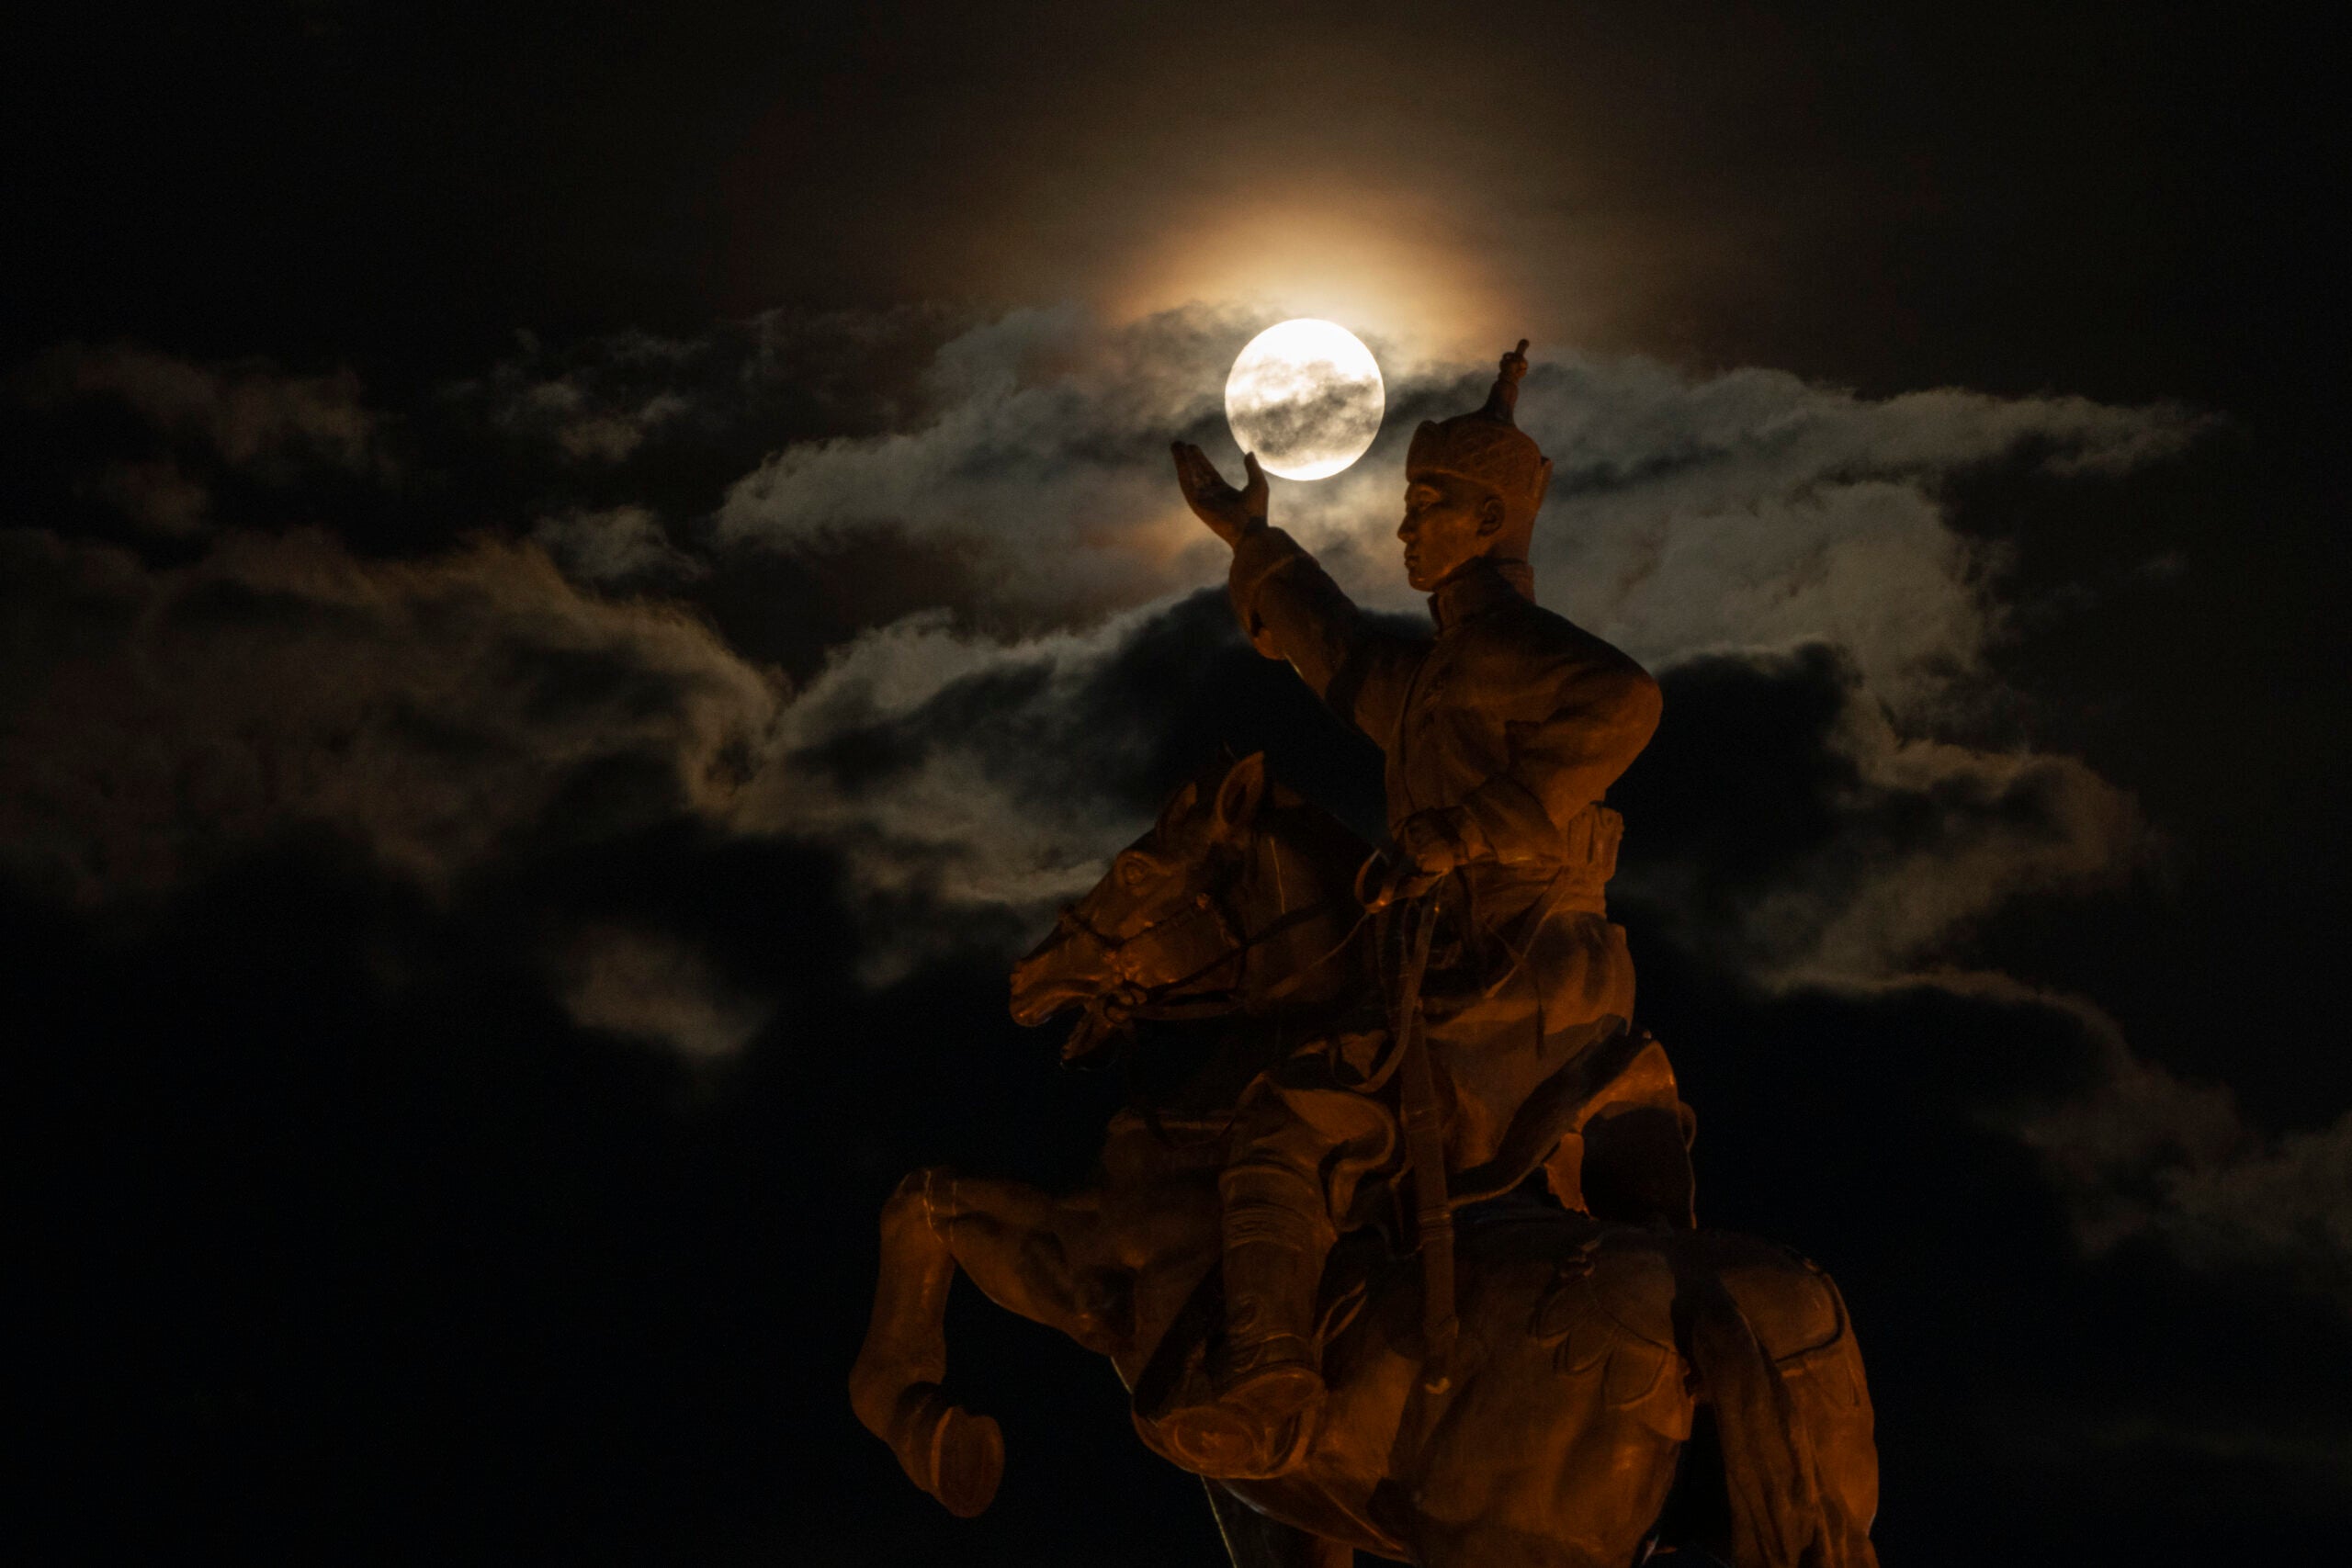 The supermoon rises near the equestrian statue of Damdin Sukhbaatar on Sukhbaatar Square in Ulaanbaatar, Mongolia.